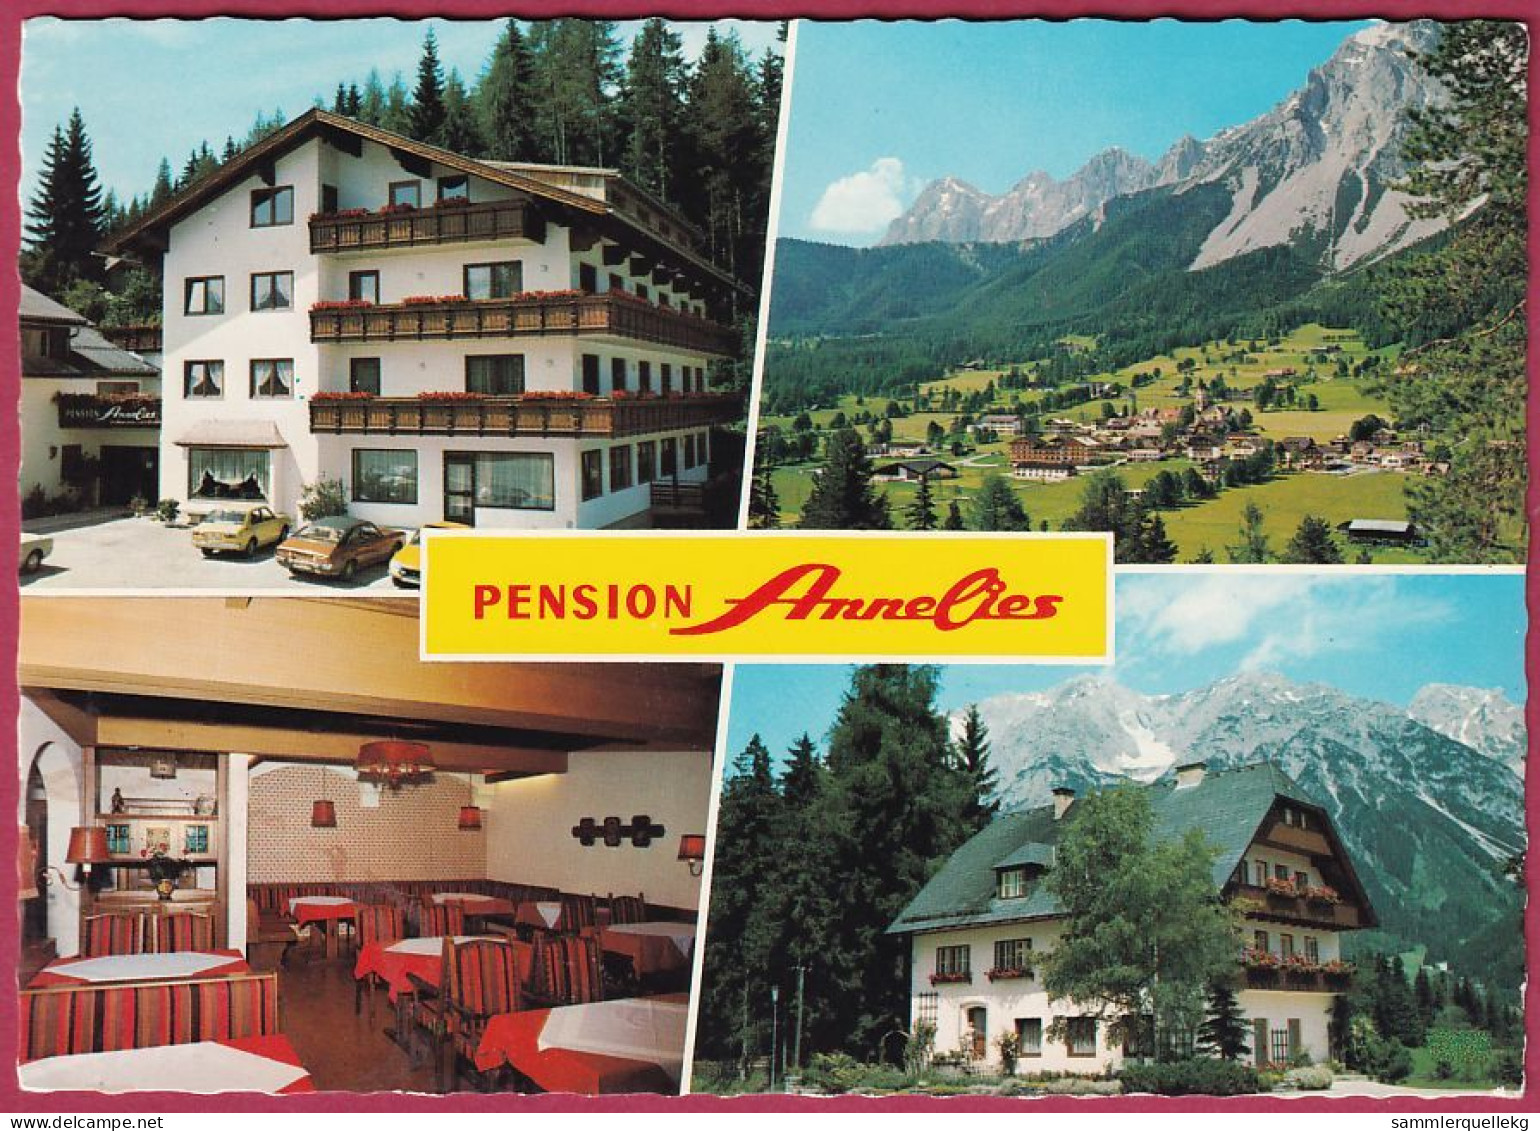 AK: Ramsau Am Dachstein - Pension Anneliese, Gelaufen 8. 6. 1976 (Nr. 4770) - Ramsau Am Dachstein